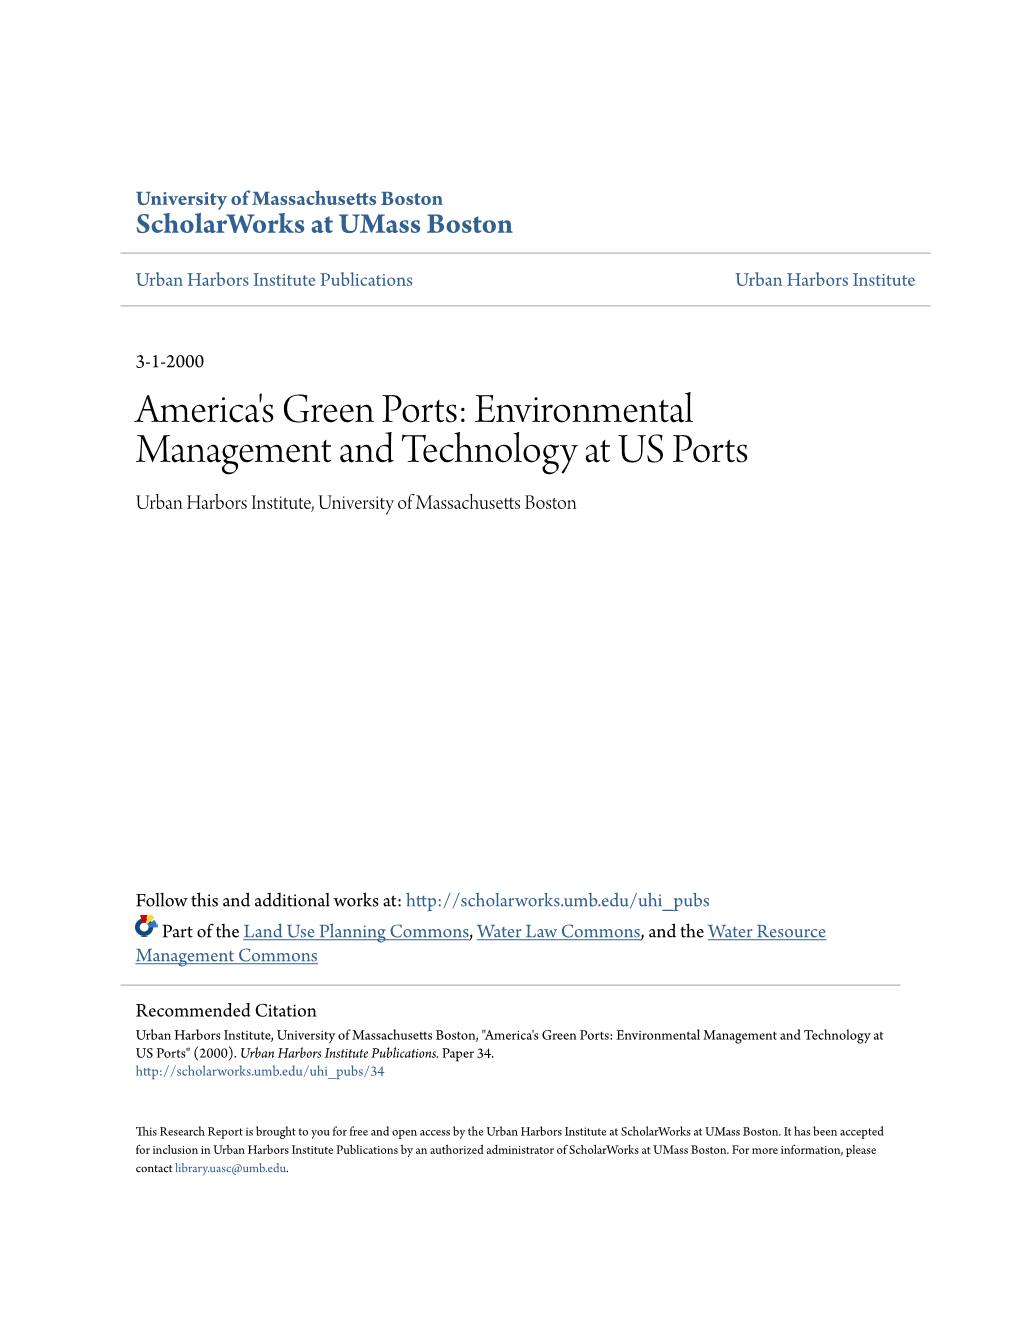 America's Green Ports: Environmental Management and Technology at US Ports Urban Harbors Institute, University of Massachusetts Boston